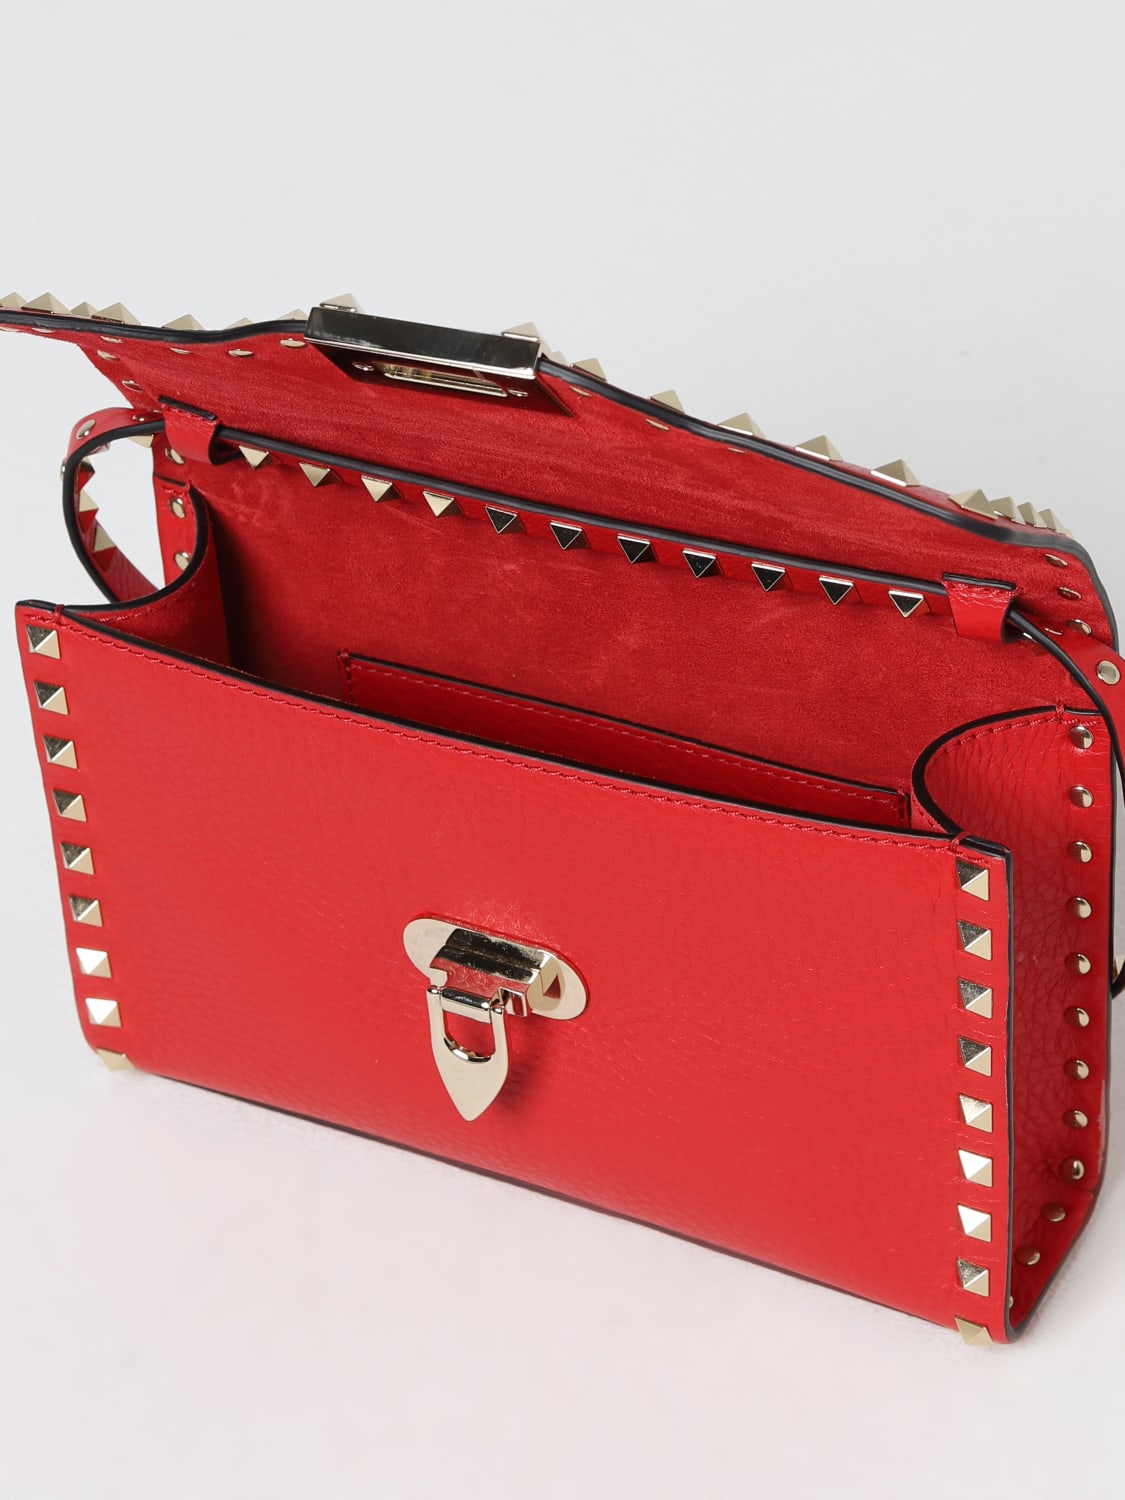 15 Best Valentino Garavani Bags: Valentino Garavani Handbags & Purses